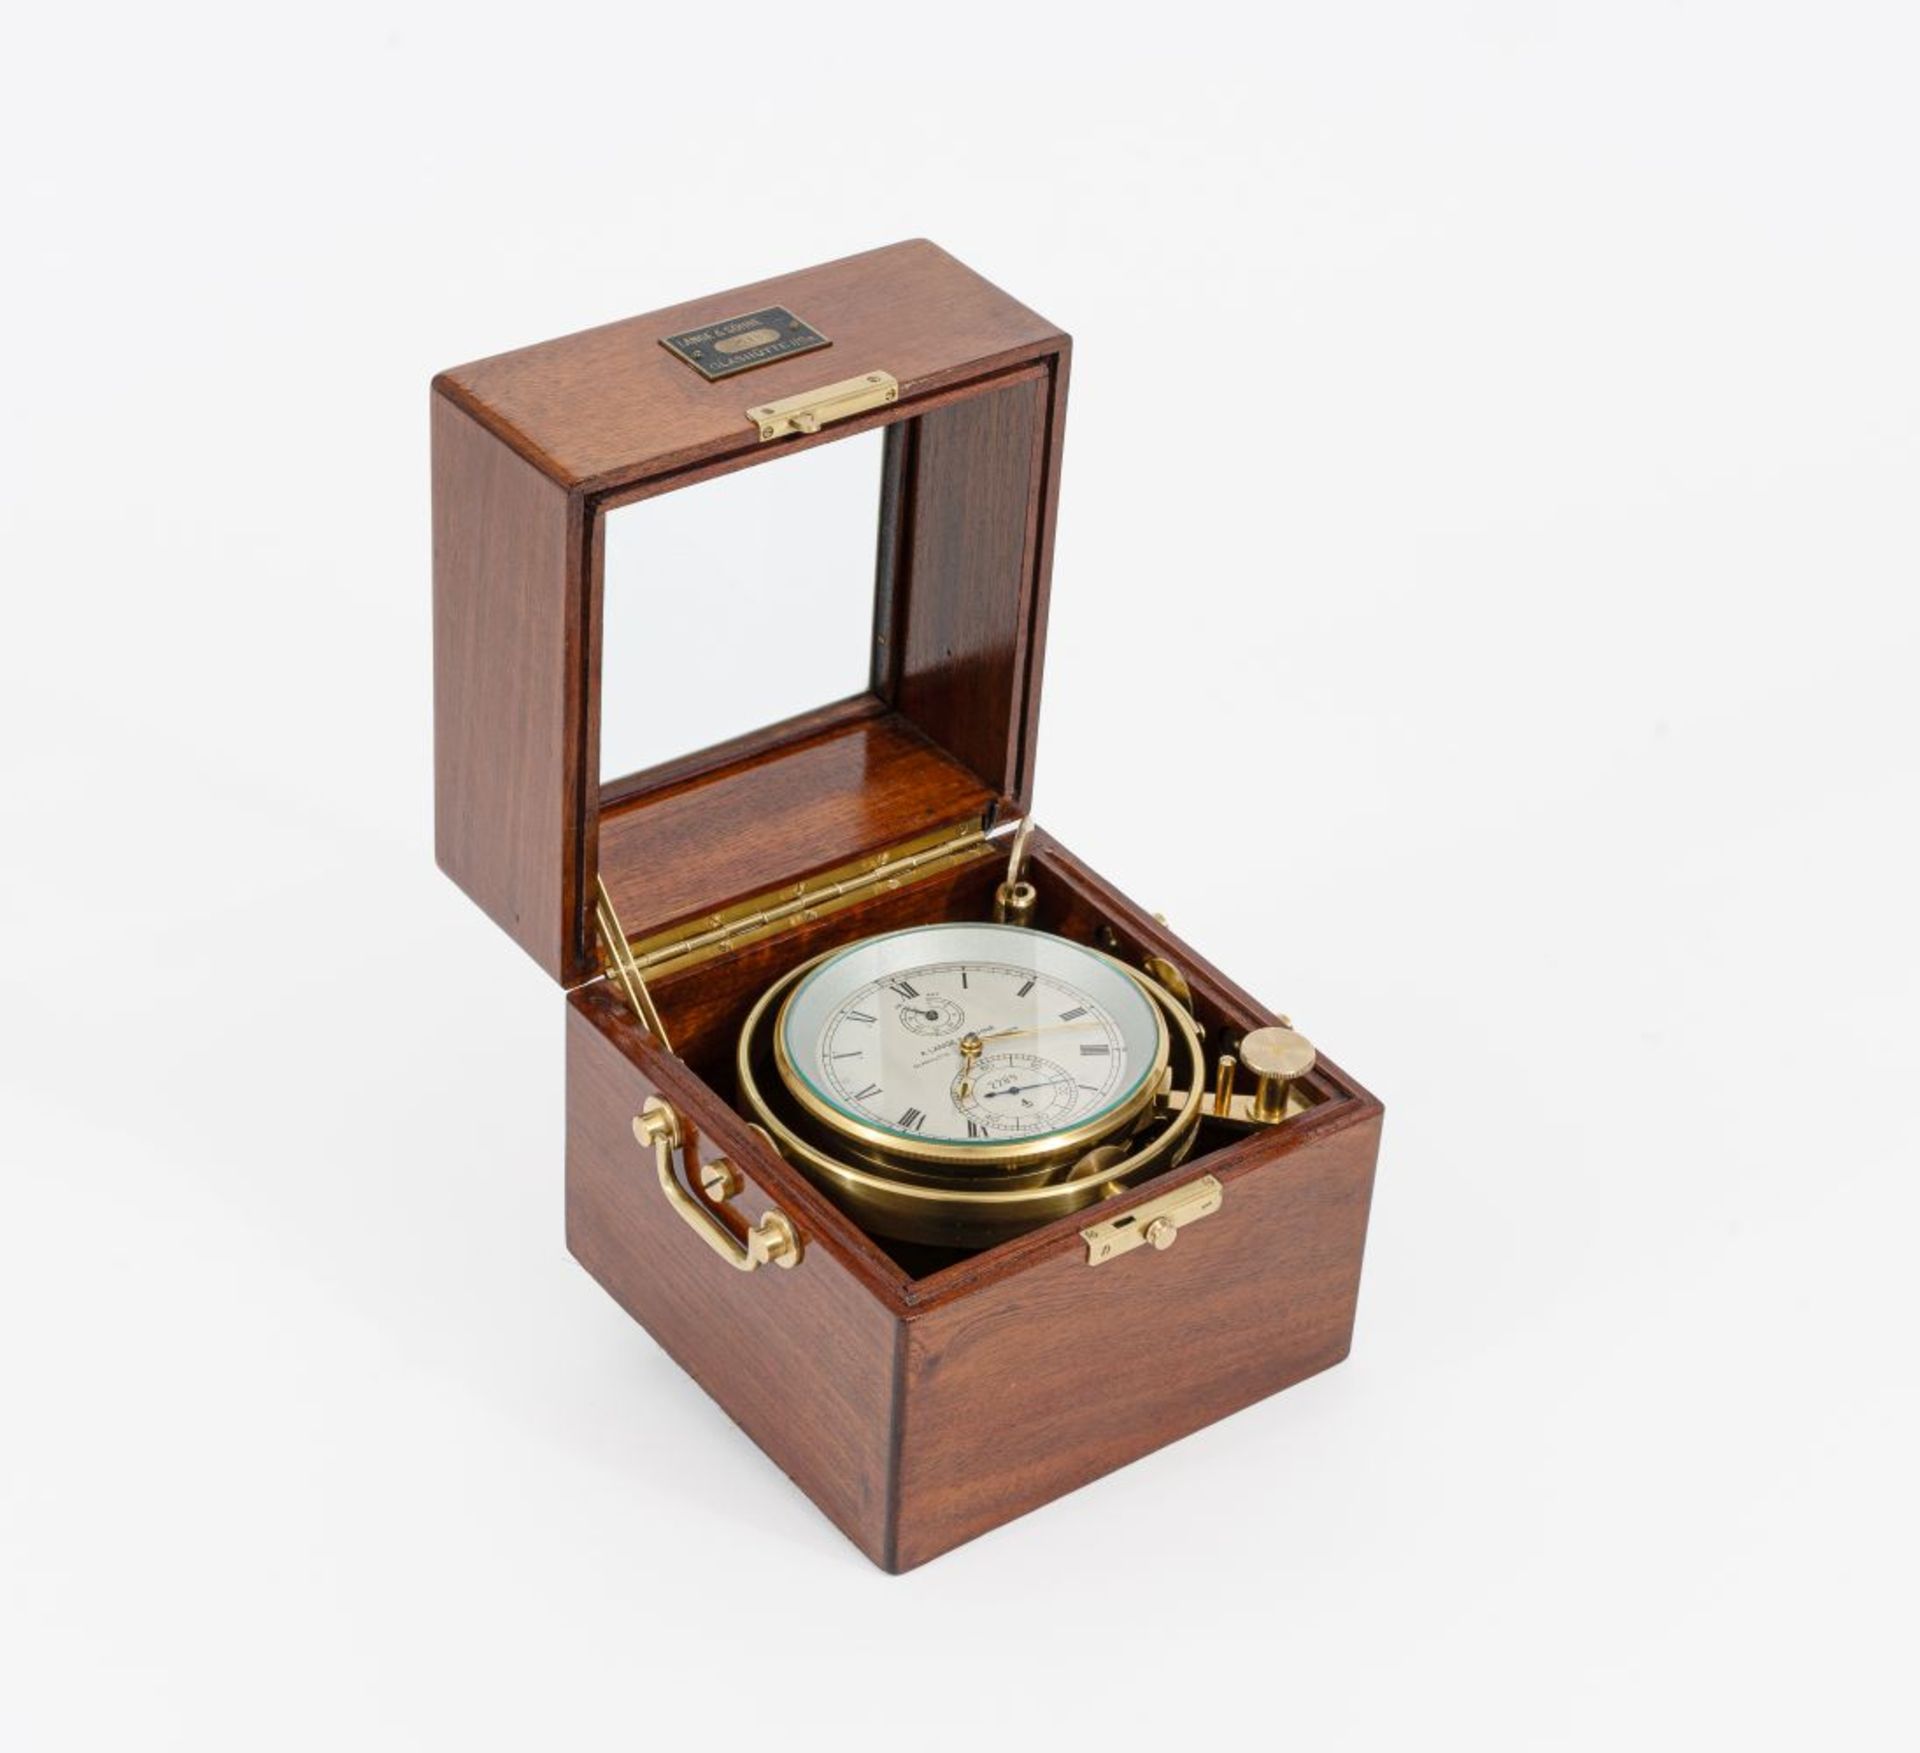 Lange & Söhne, A. est. 1845 in Glashütte. A rare Marine Chronometer.